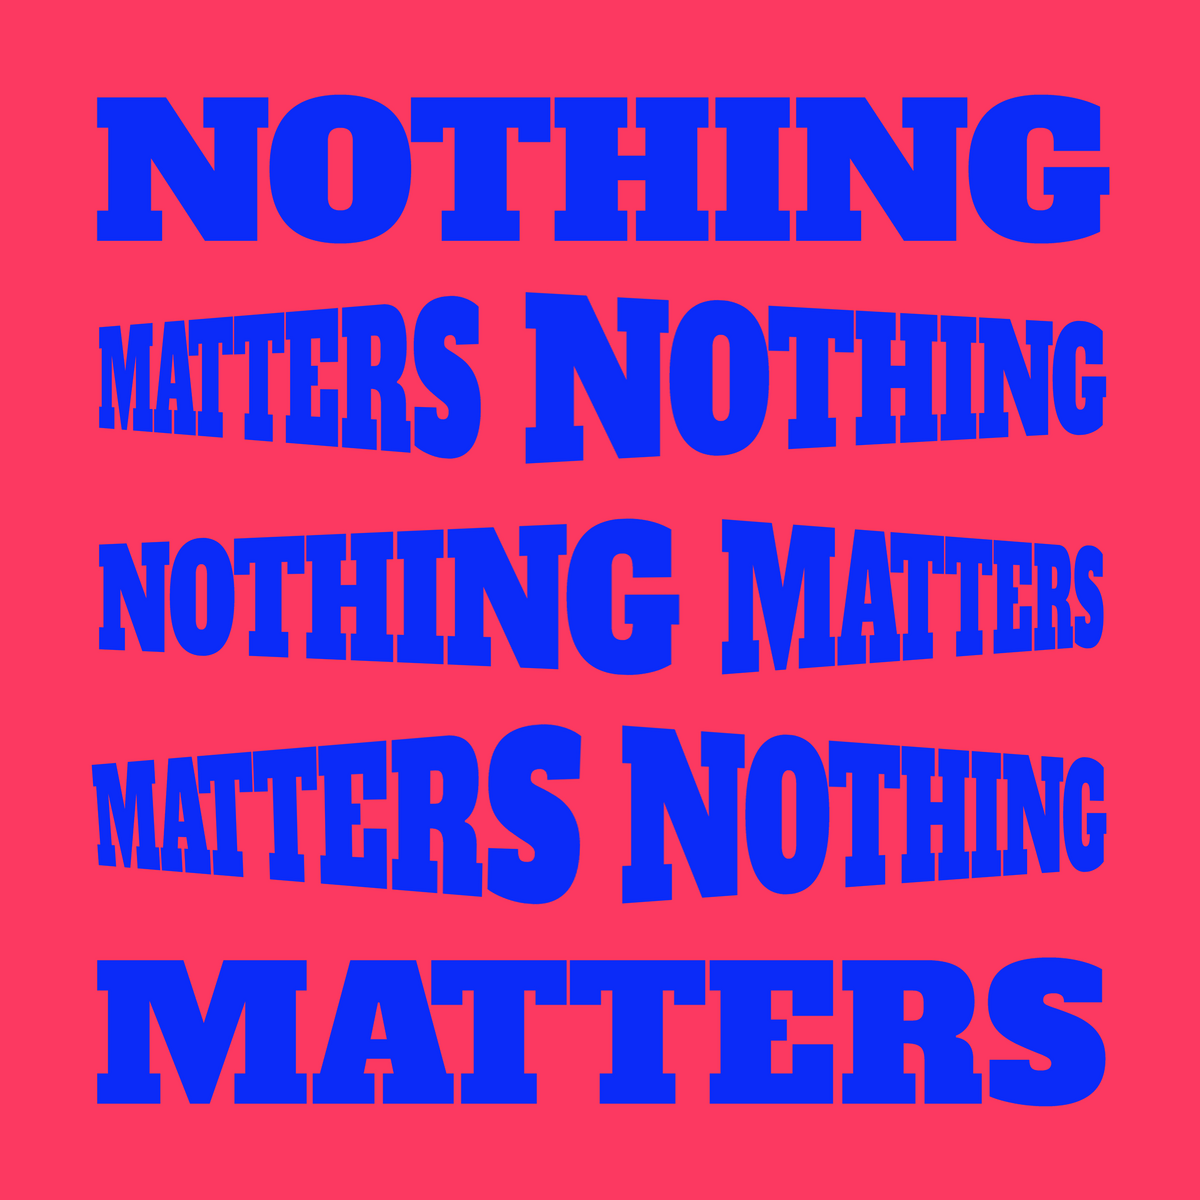 Nothing matters the last. Nothing matters. YUMDDA.